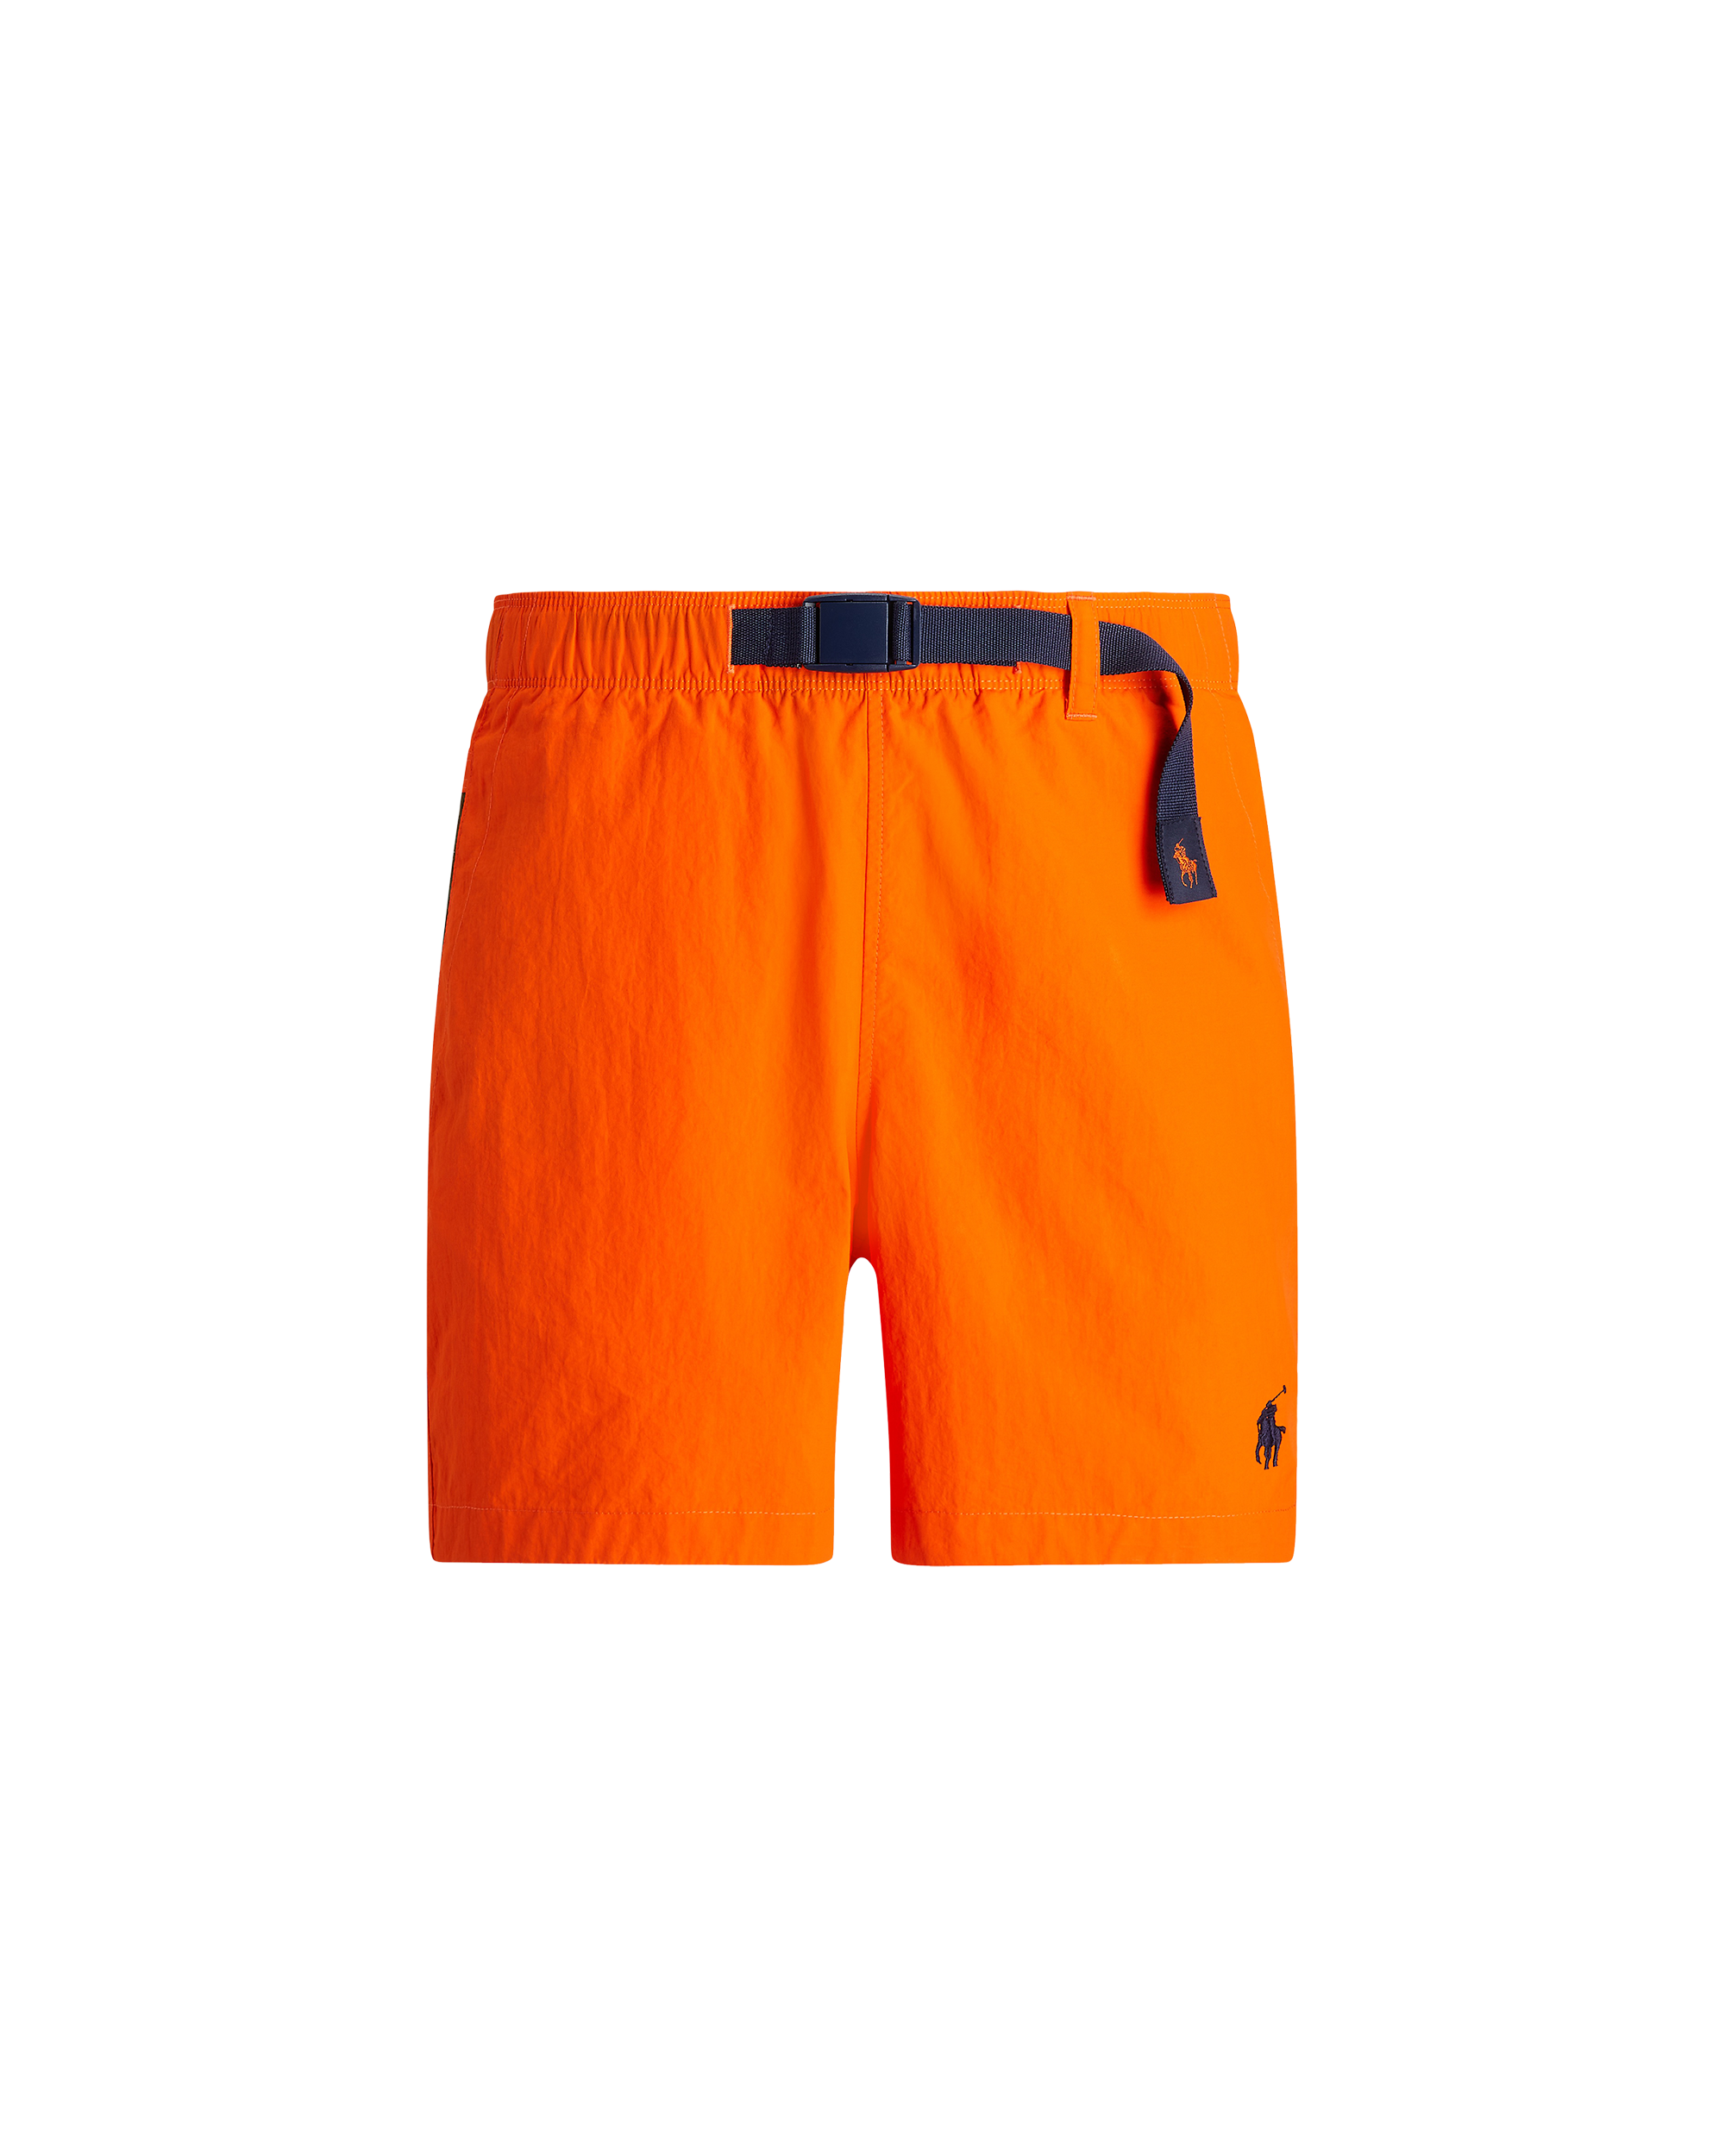 Nylon Climbing Shorts - Orange